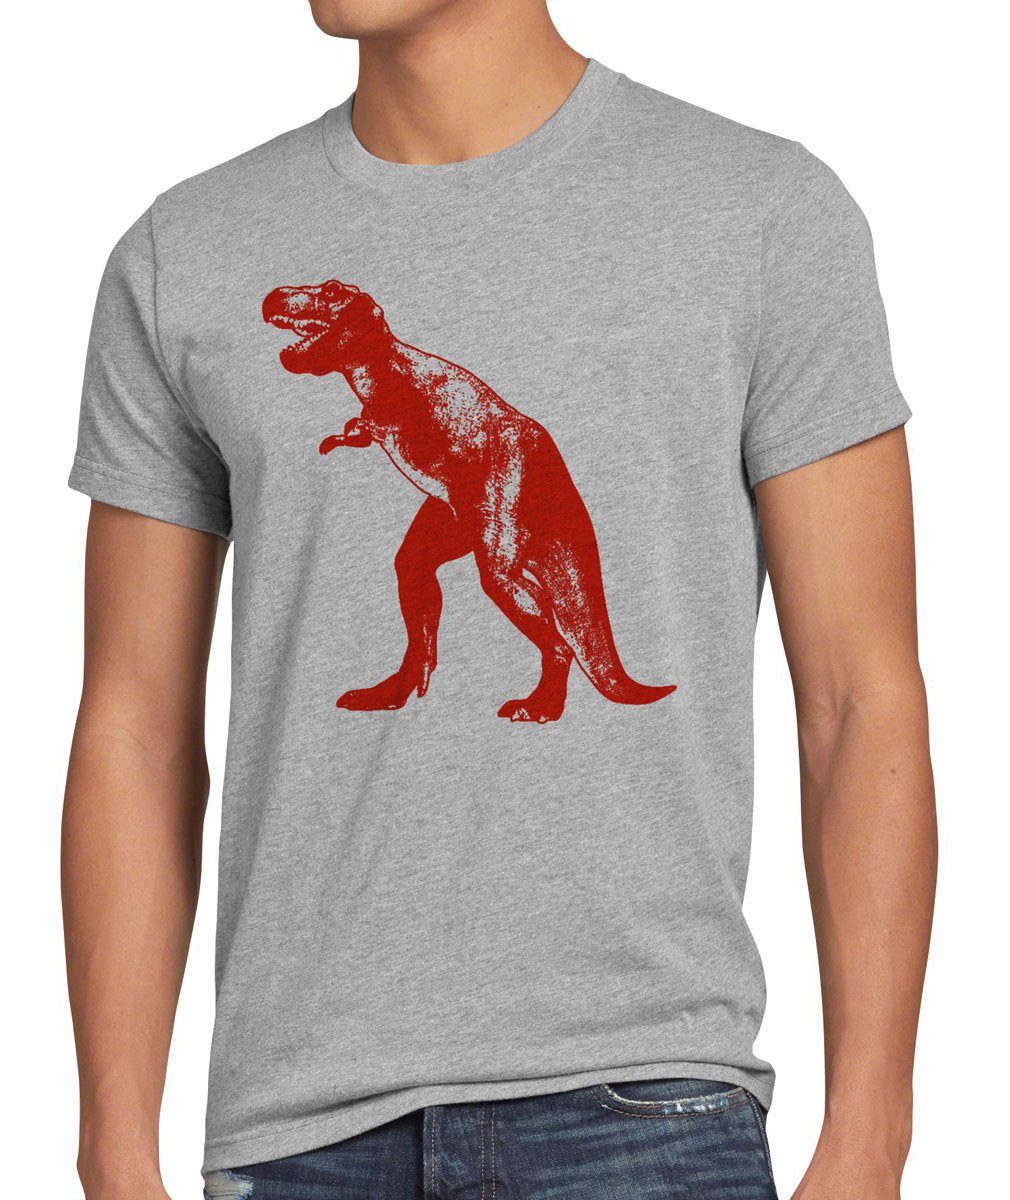 style3 Print-Shirt Herren T-Shirt Dinosaurier Rex Sheldon Cooper Evolution big bang Dino Theory grau meliert